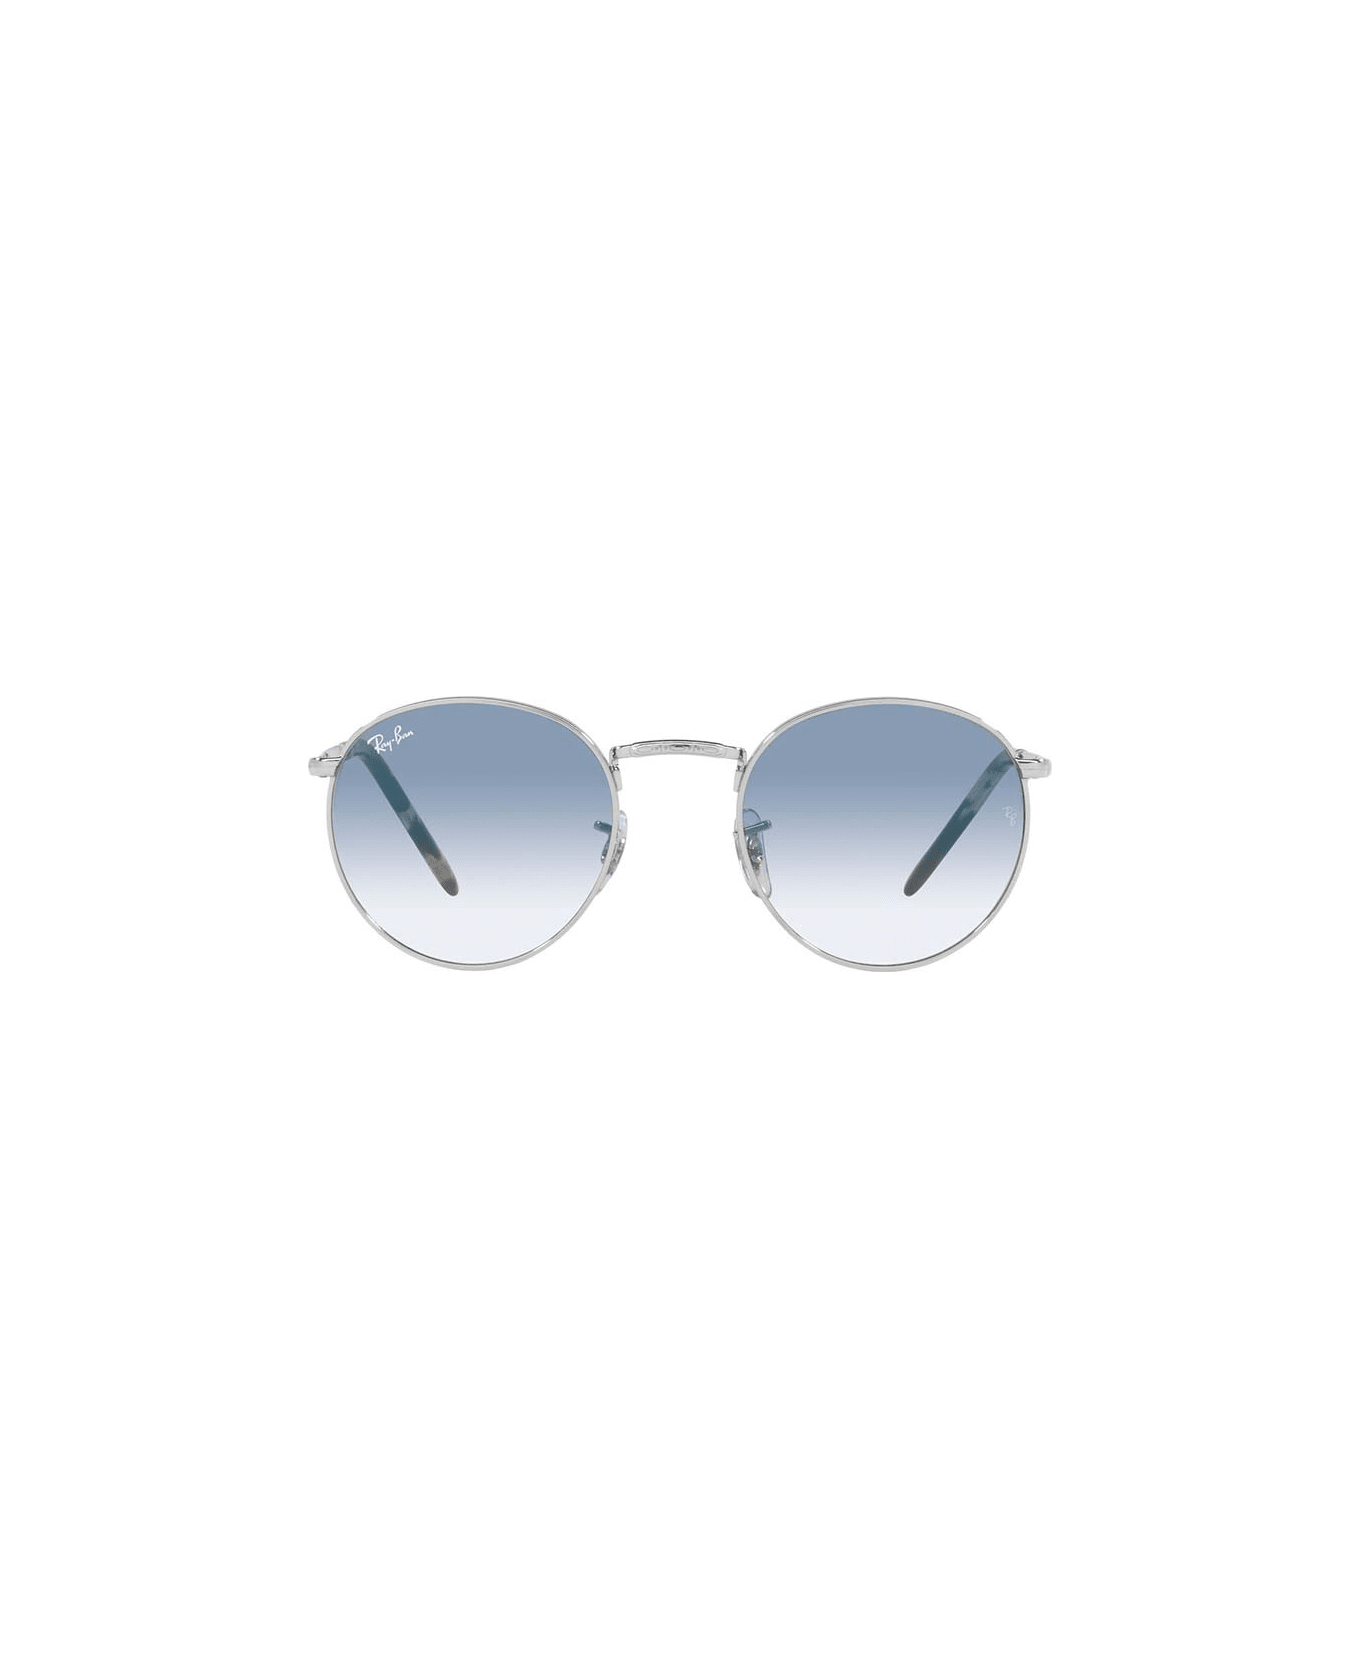 Ray-Ban Eyewear - Silver/Blu